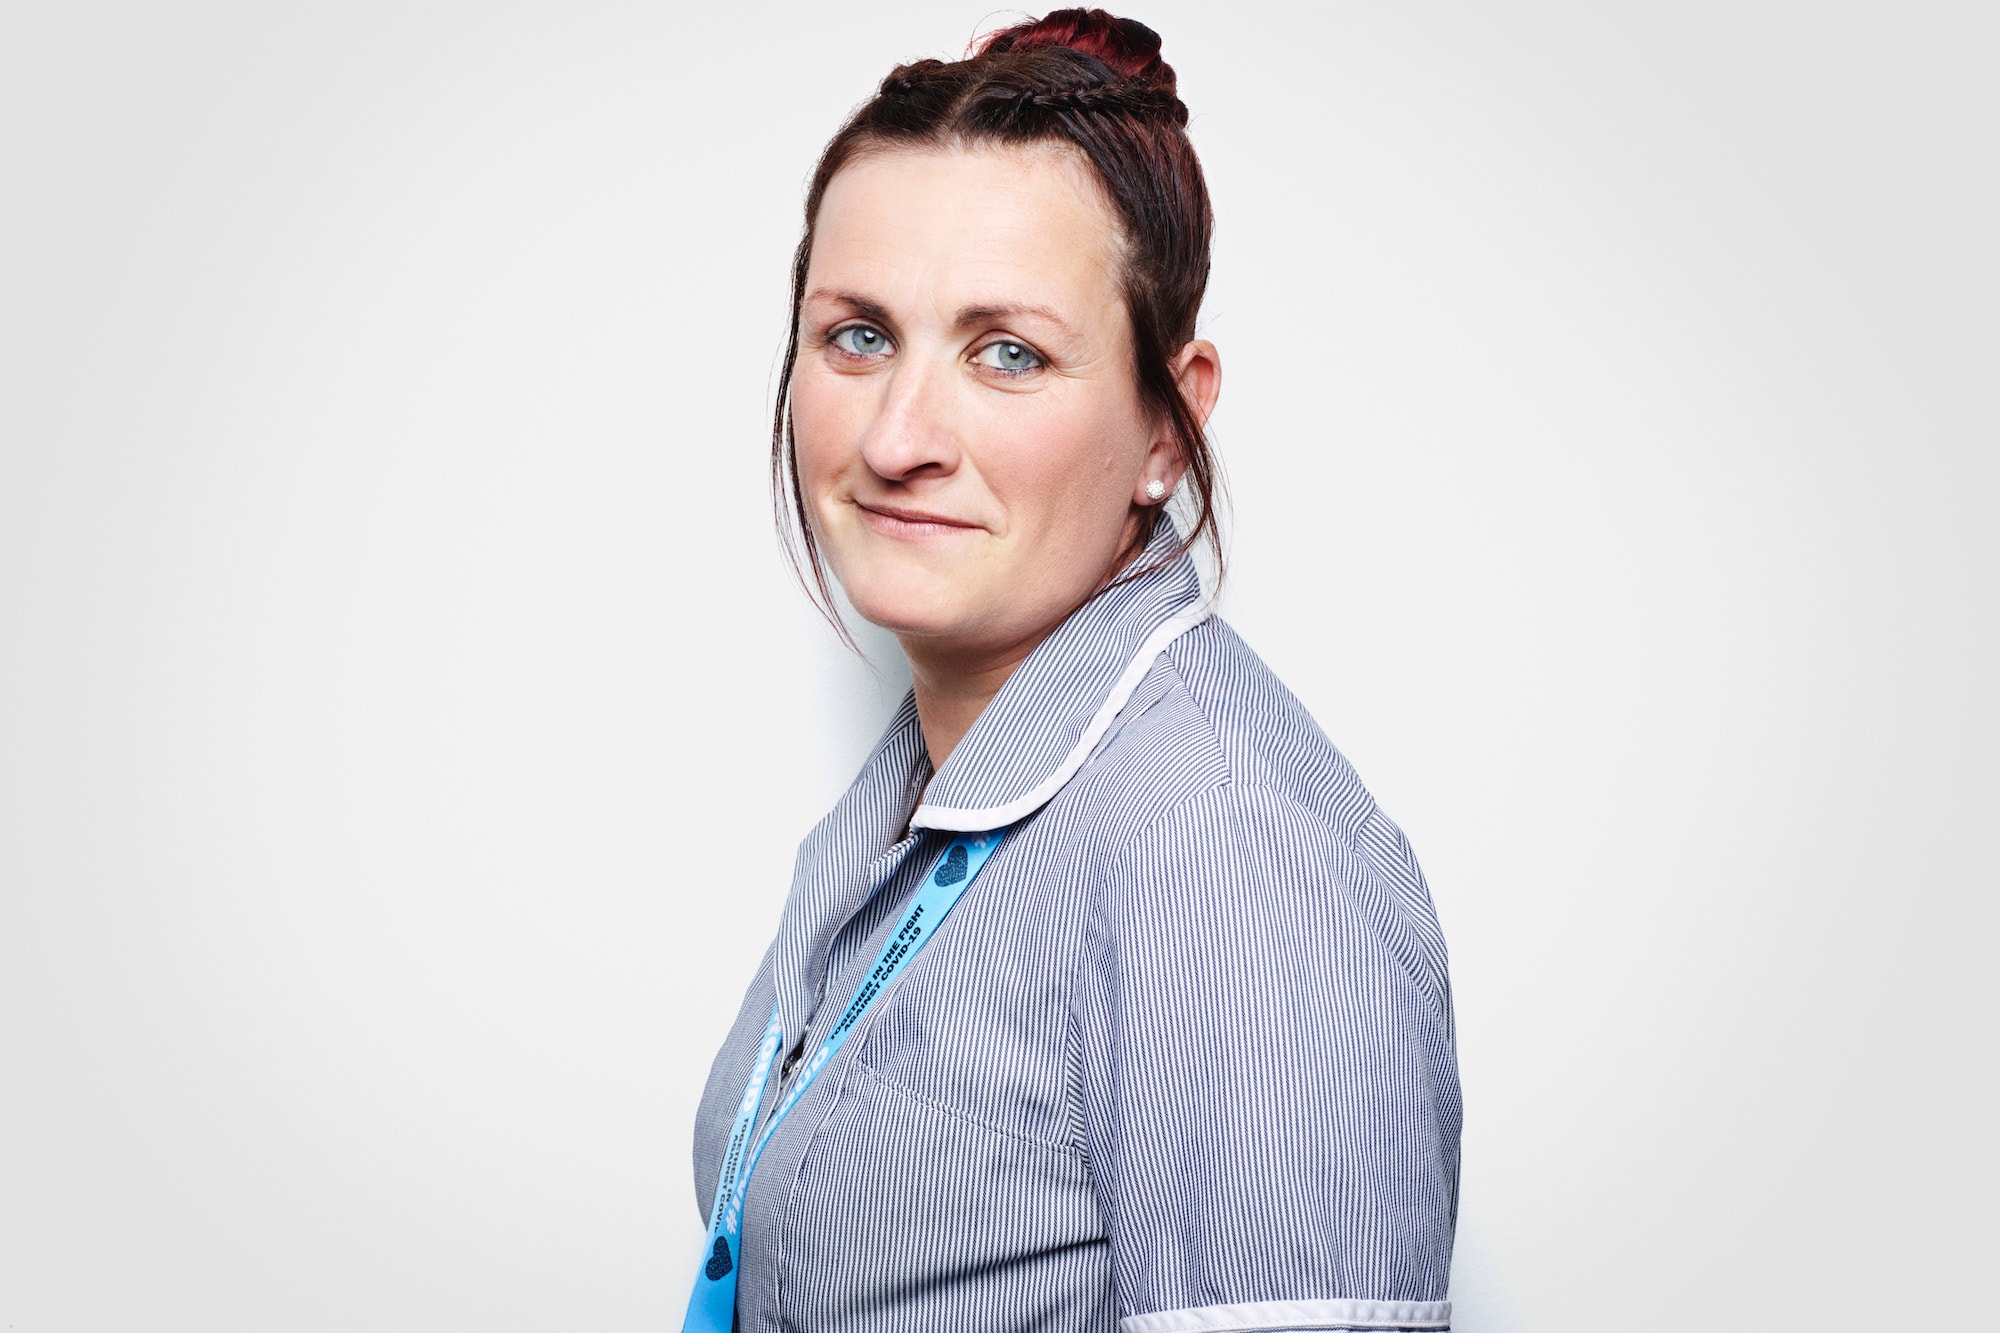 Rankin NHS England Photo Series COVID-19 Pandemic Response Heroes Healthcare Workers 